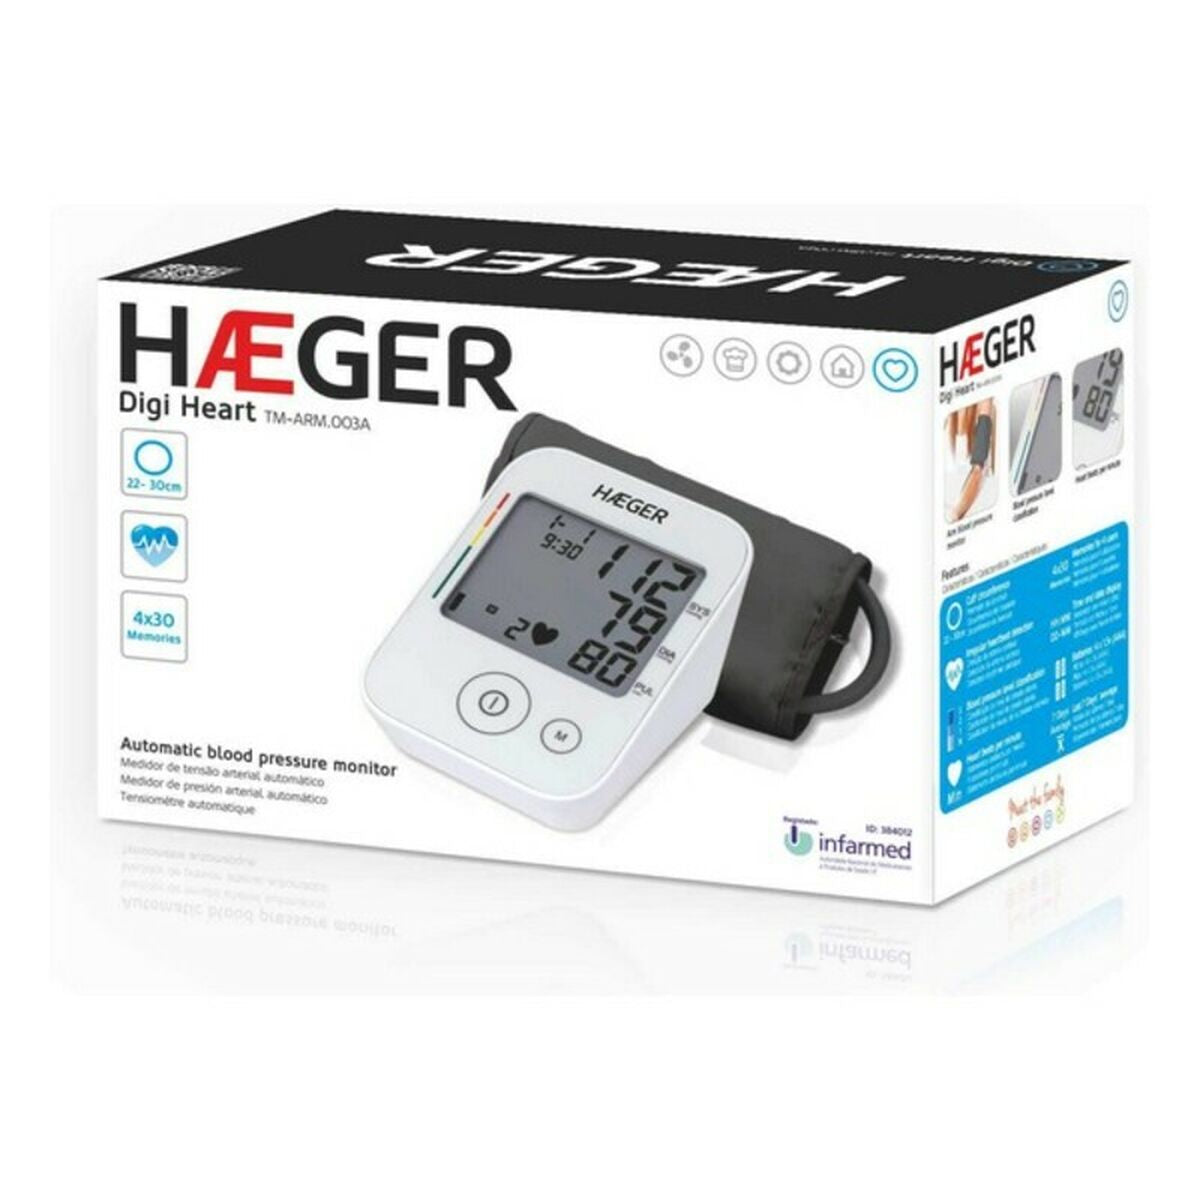 Arm Blood Pressure Monitor Haeger Digi Heart